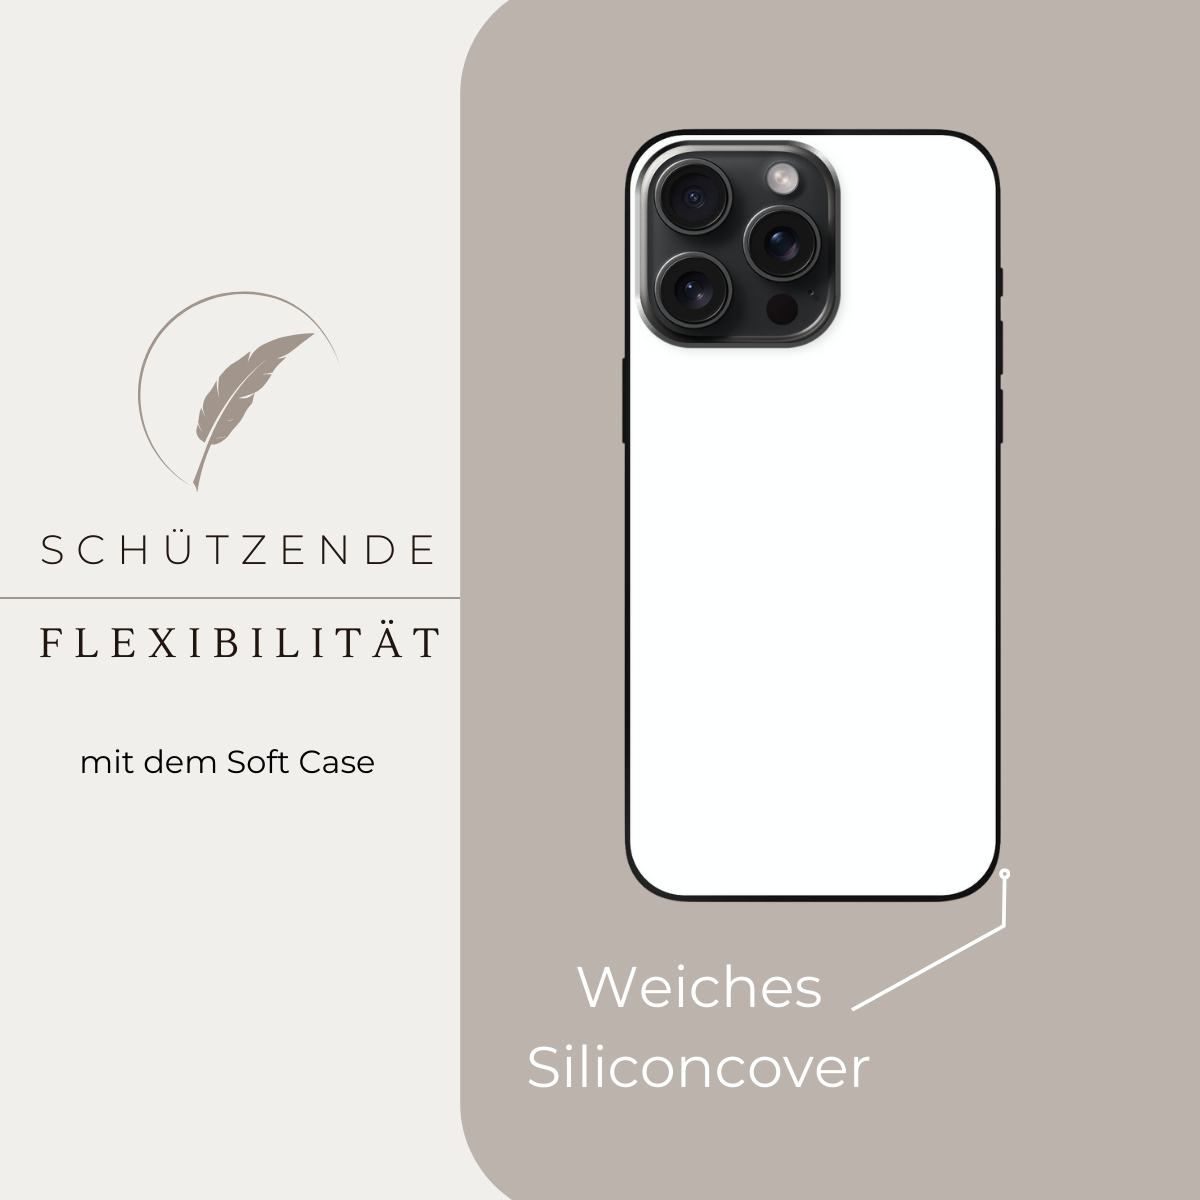 Sicherheit - Believe in yourself - iPhone 12 Pro Max Handyhülle